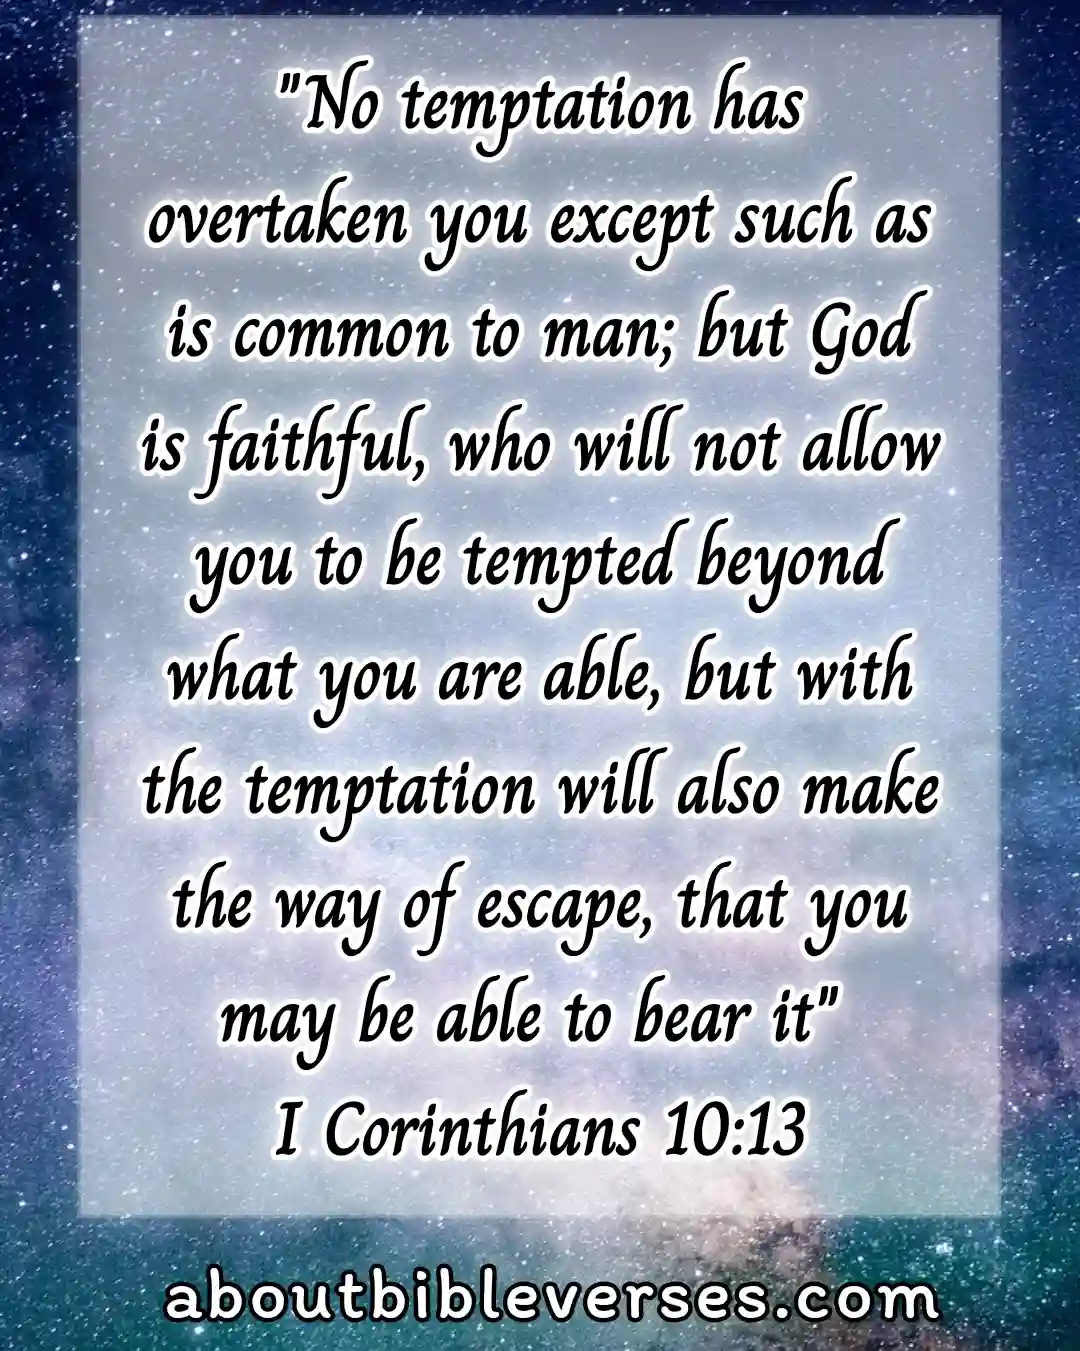 Bible Verse About Job Suffering (1 Corinthians 10:13)